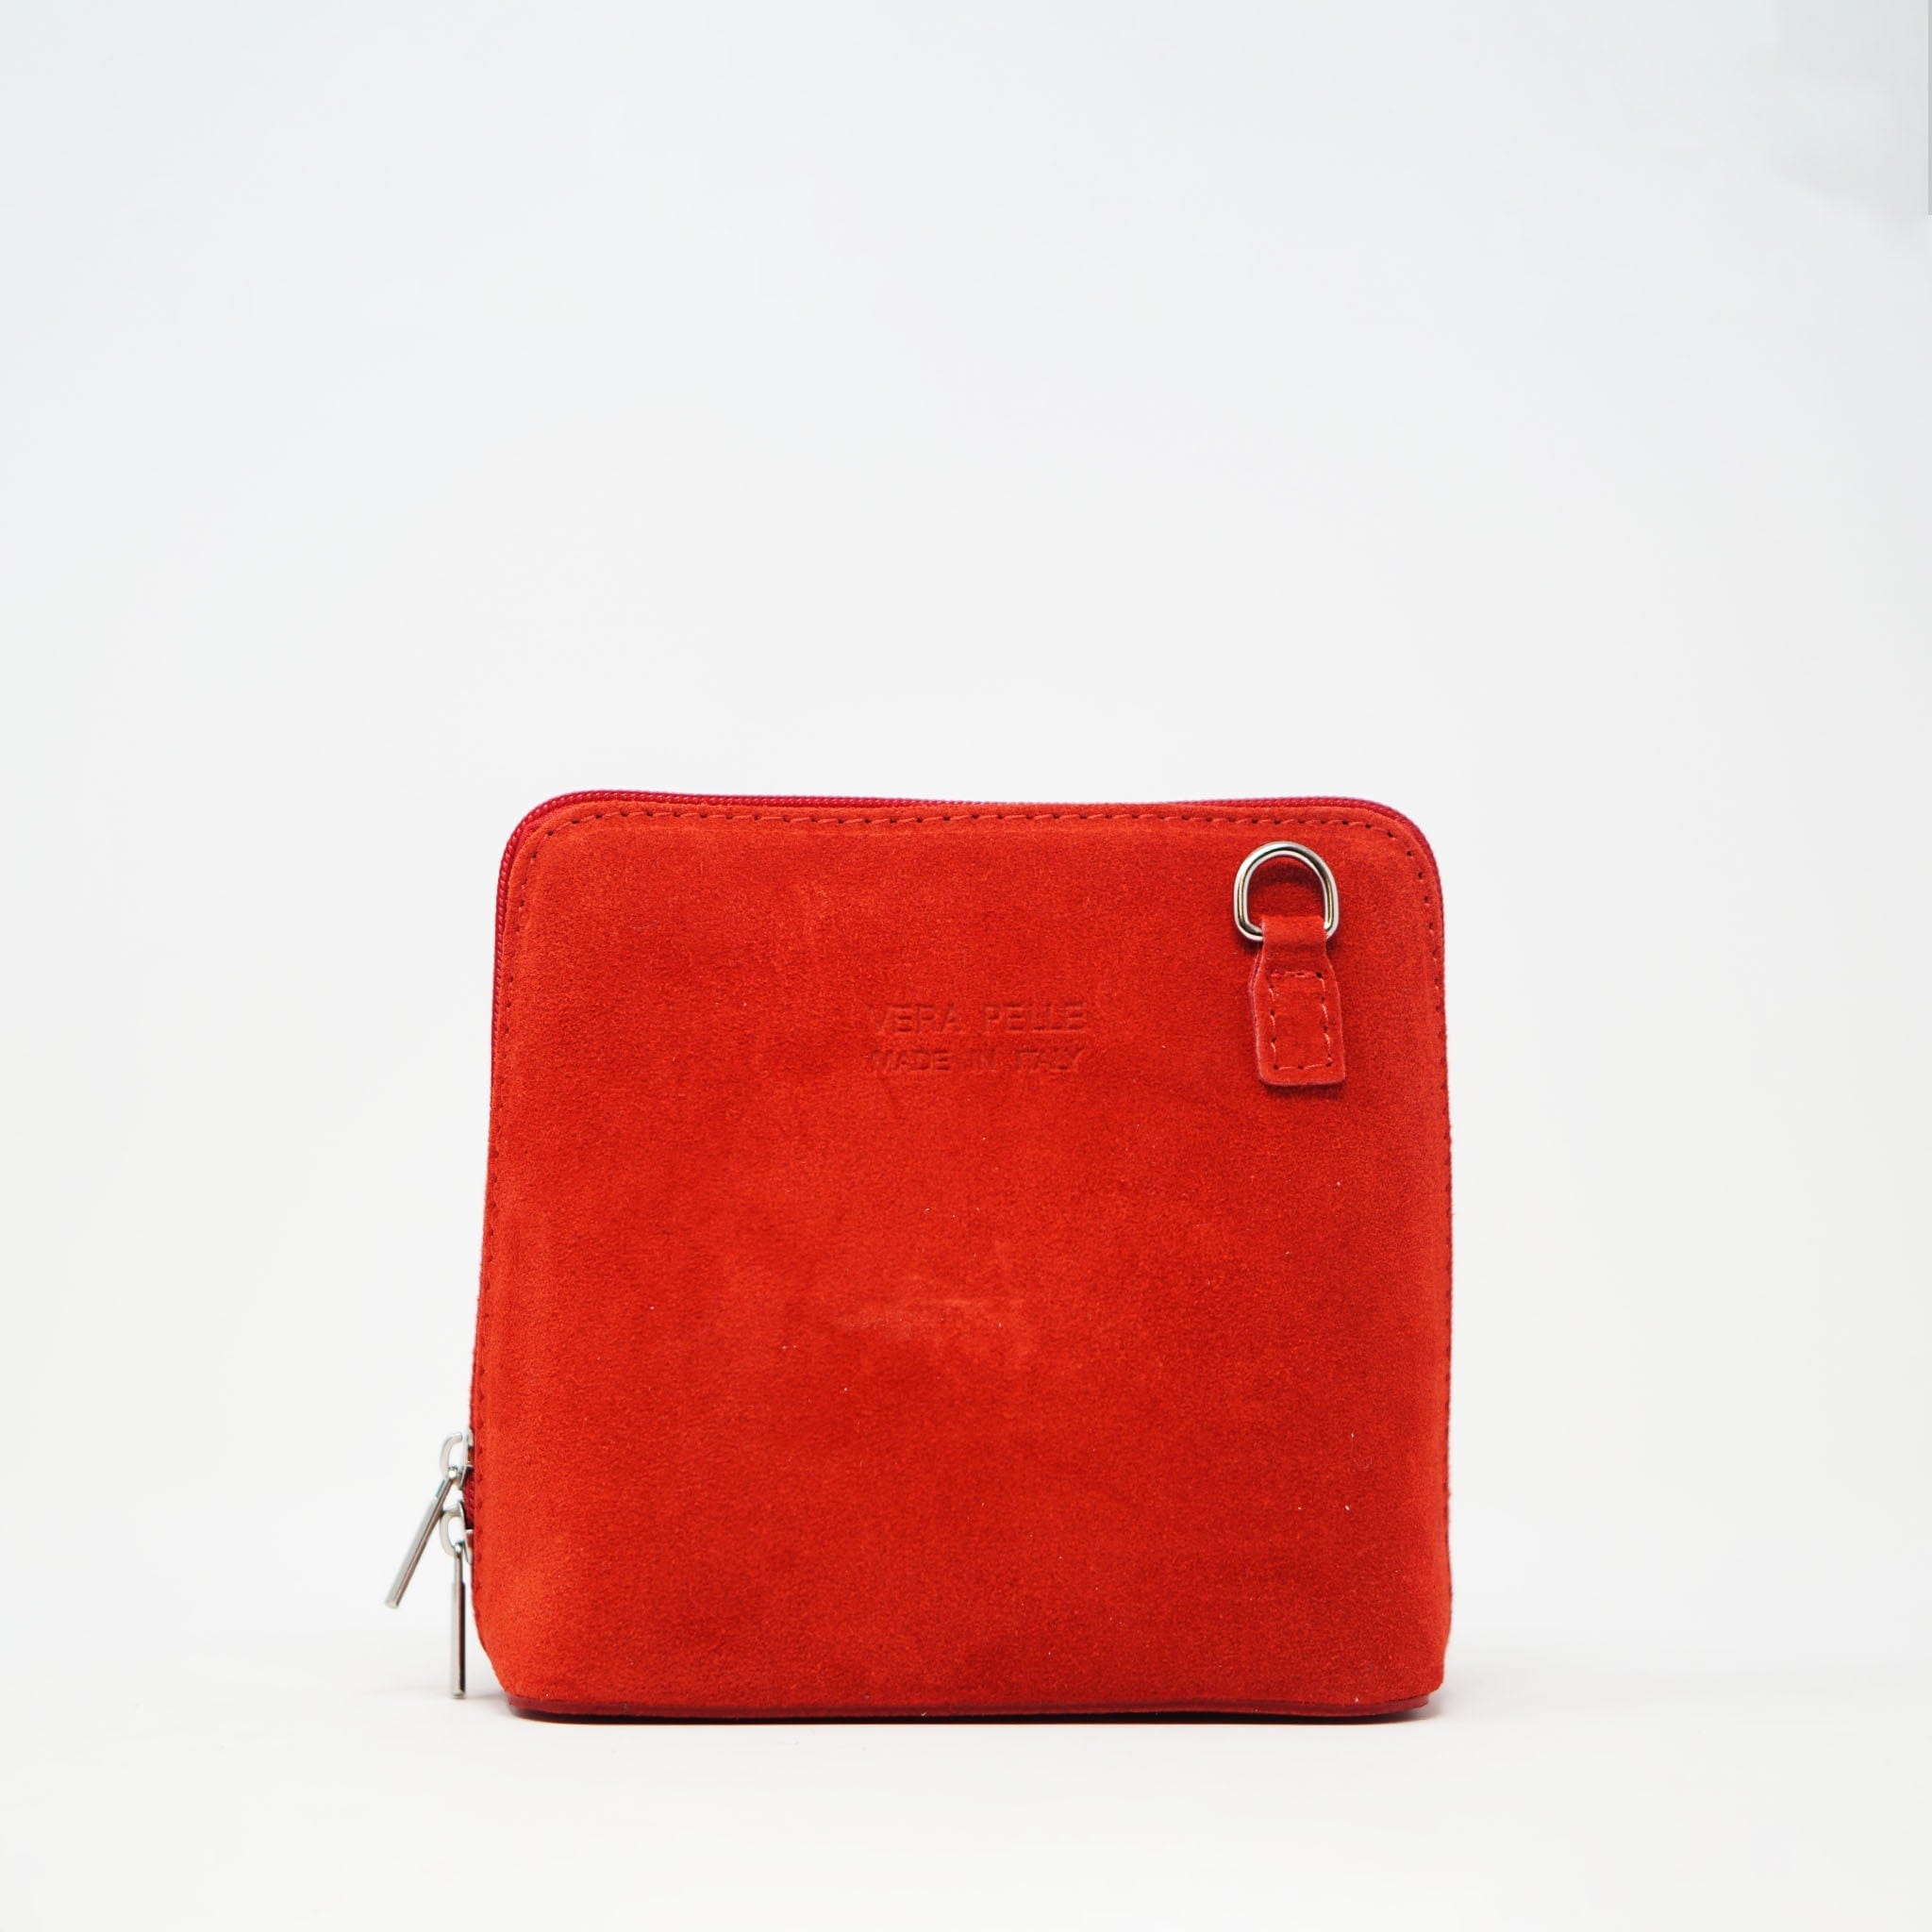 Bagitali V155 Small Suede Shoulder Bag Red BAGS  - ZIGZAG Footwear